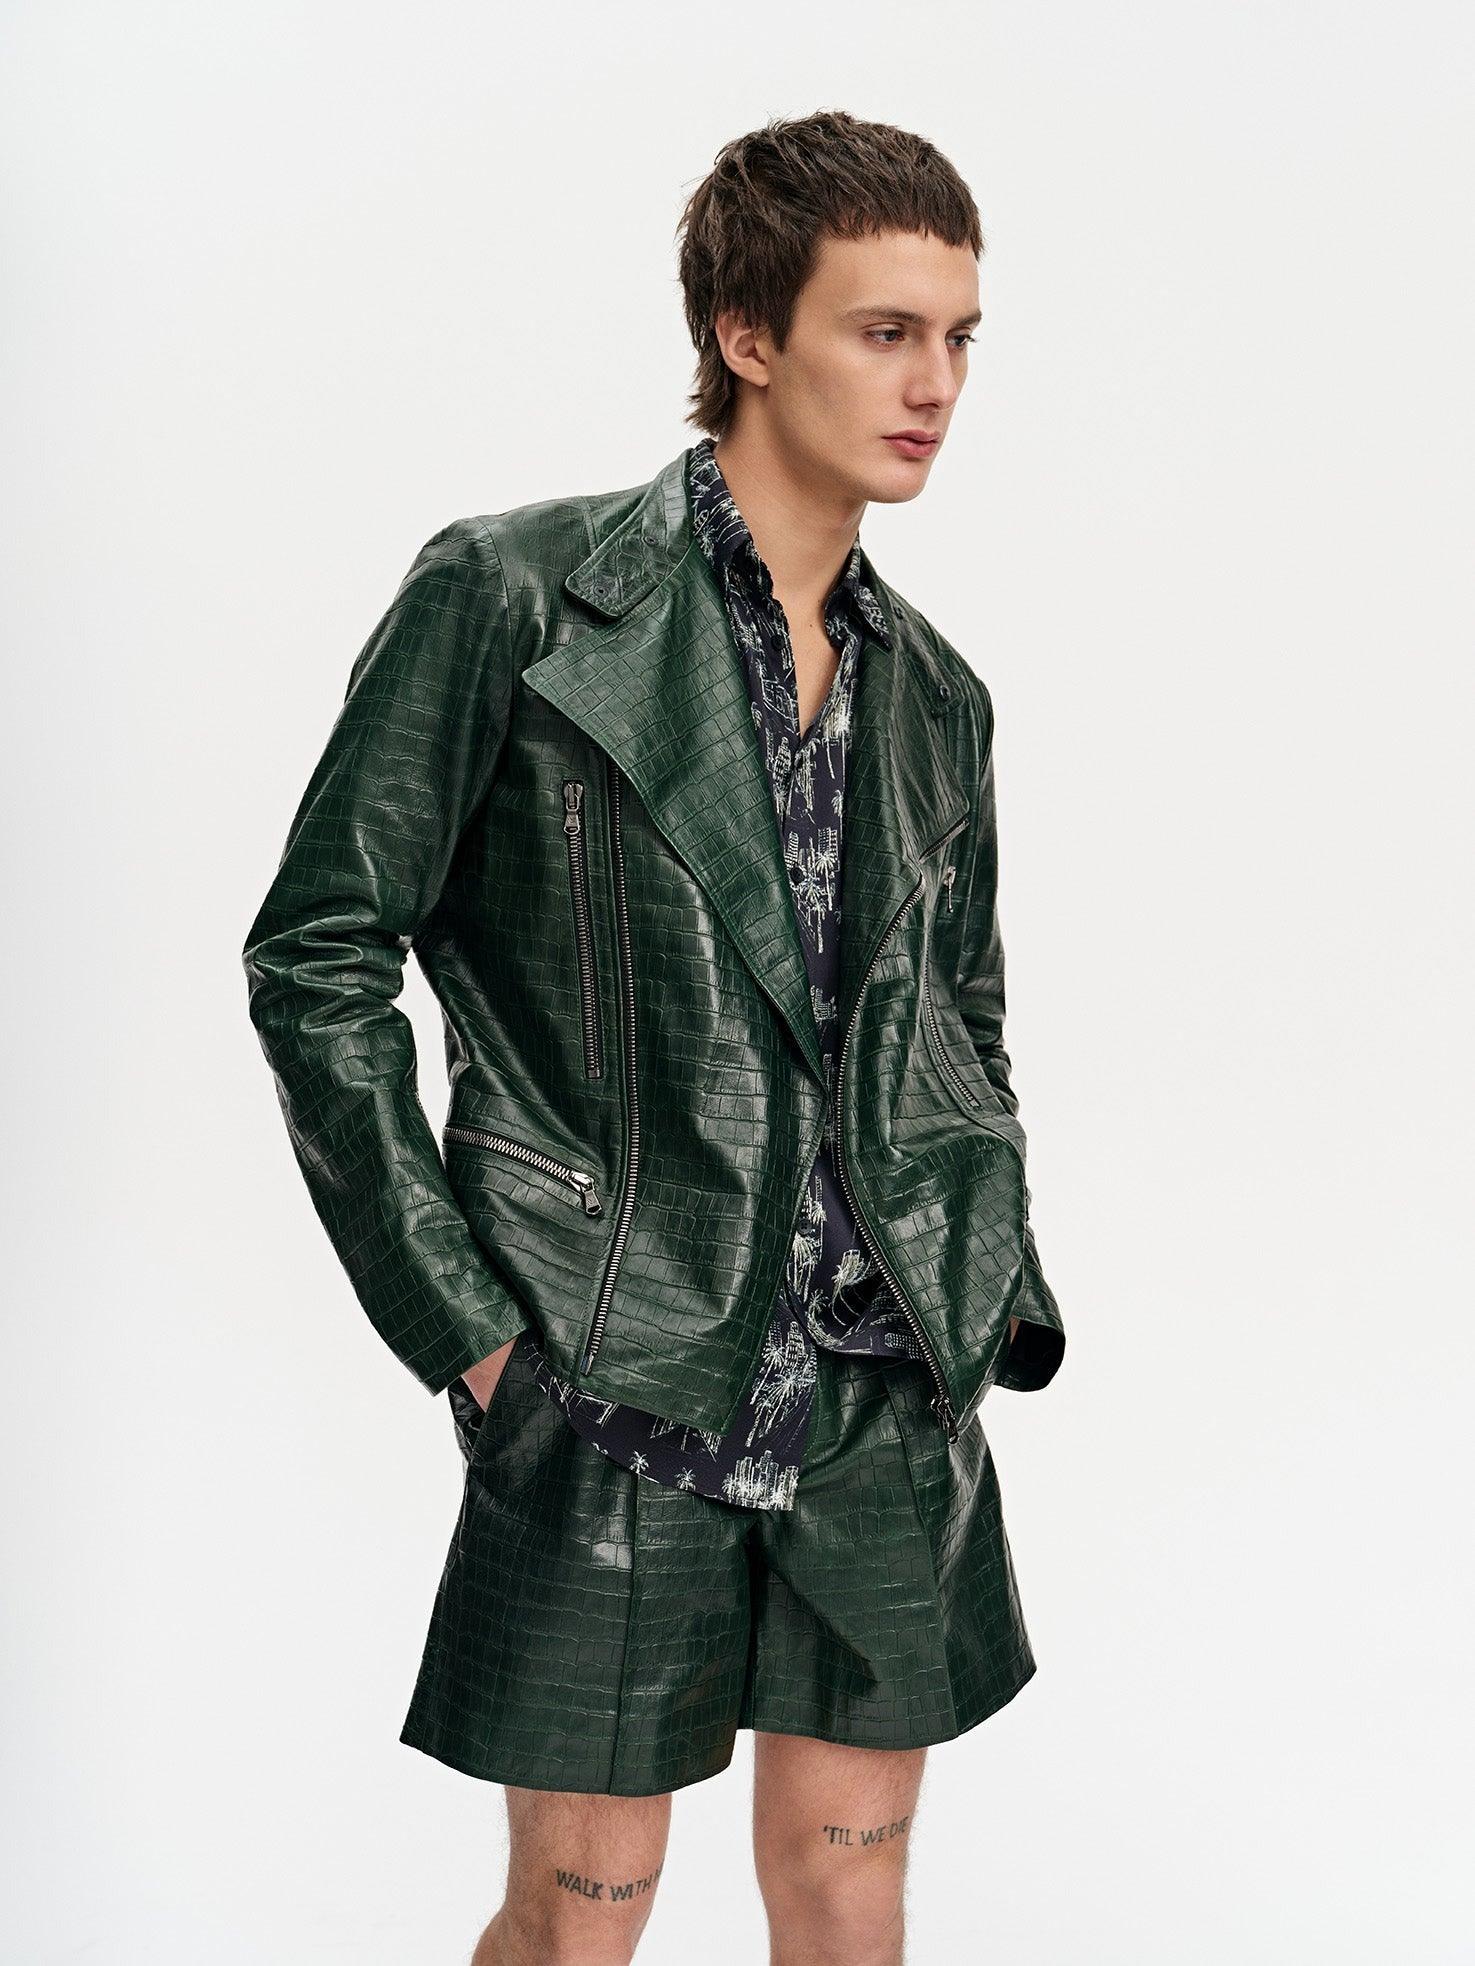 Croc-Embossed Leather Jacket for Men